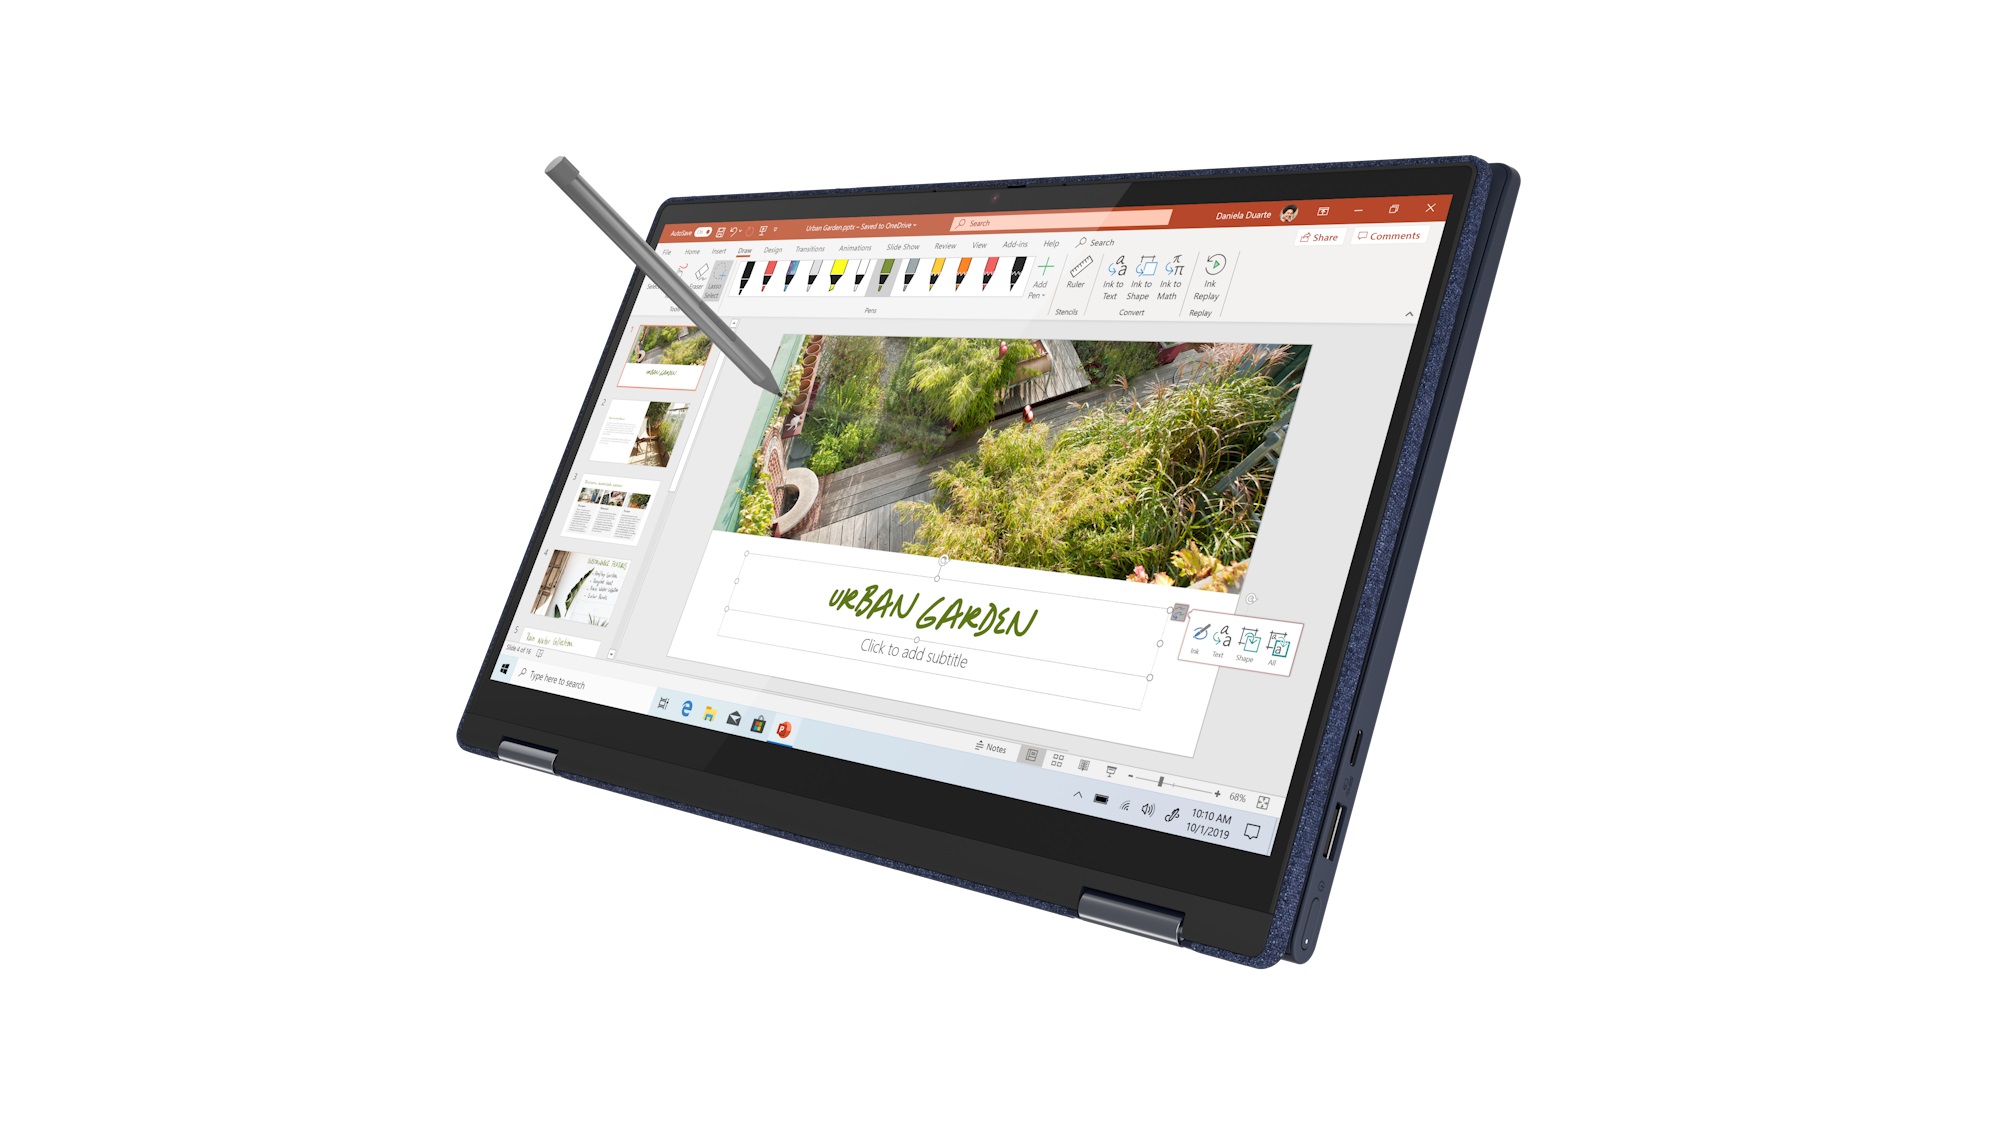 Lenovo introduces new Yoga consumer laptops running Windows 10 24c07ff2fc58c41513b57188777b3b9a.jpg